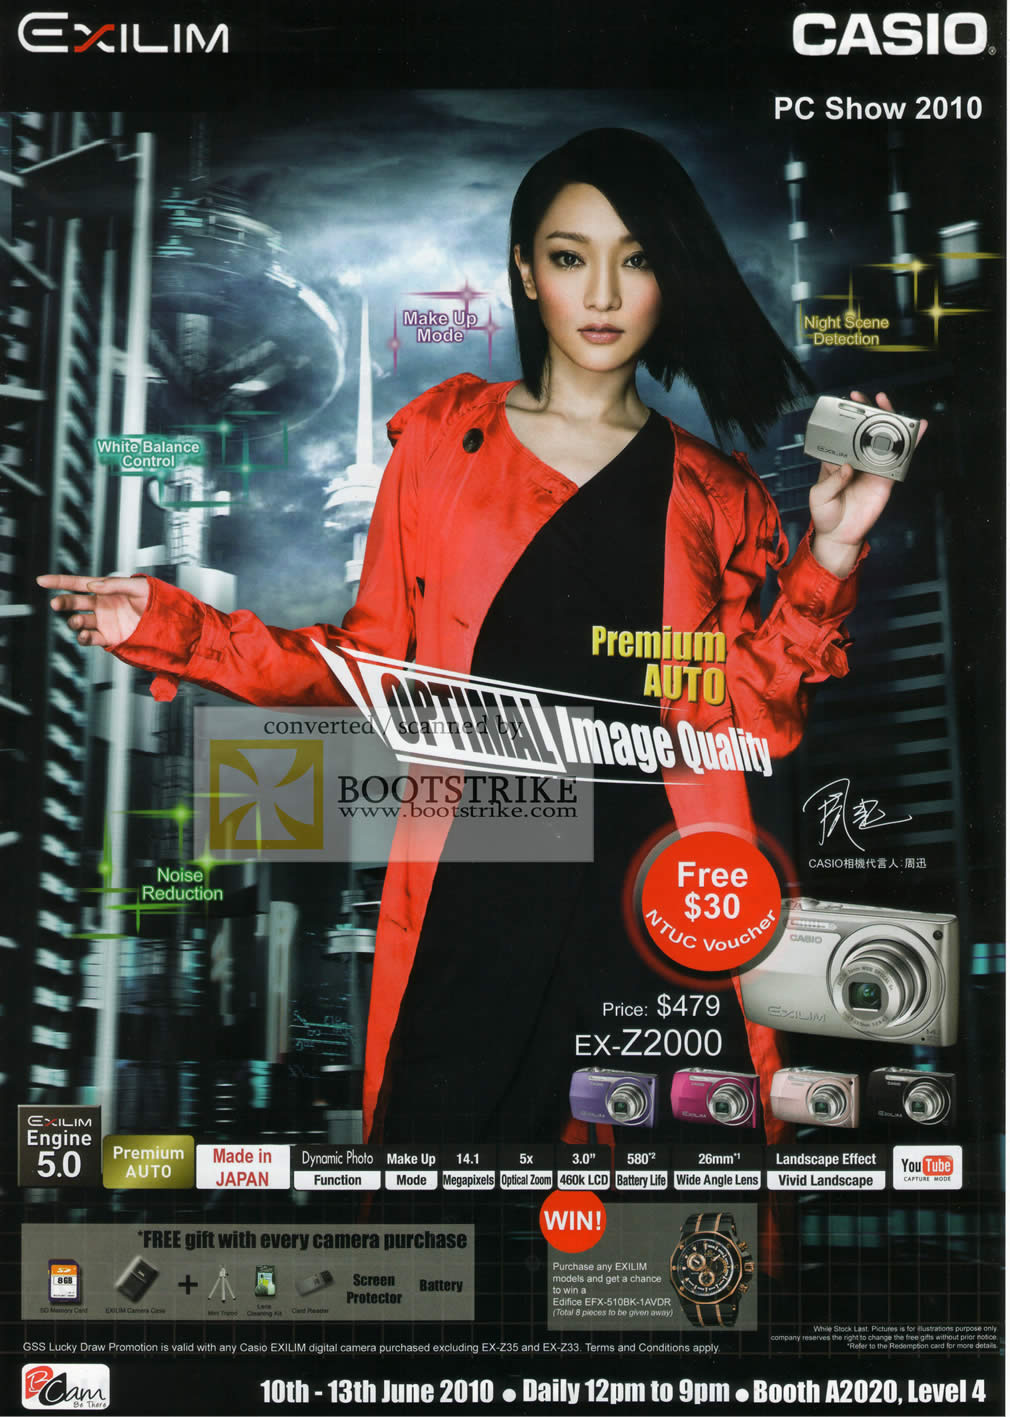 PC Show 2010 price list image brochure of Casio Digital Camera EX Z2000